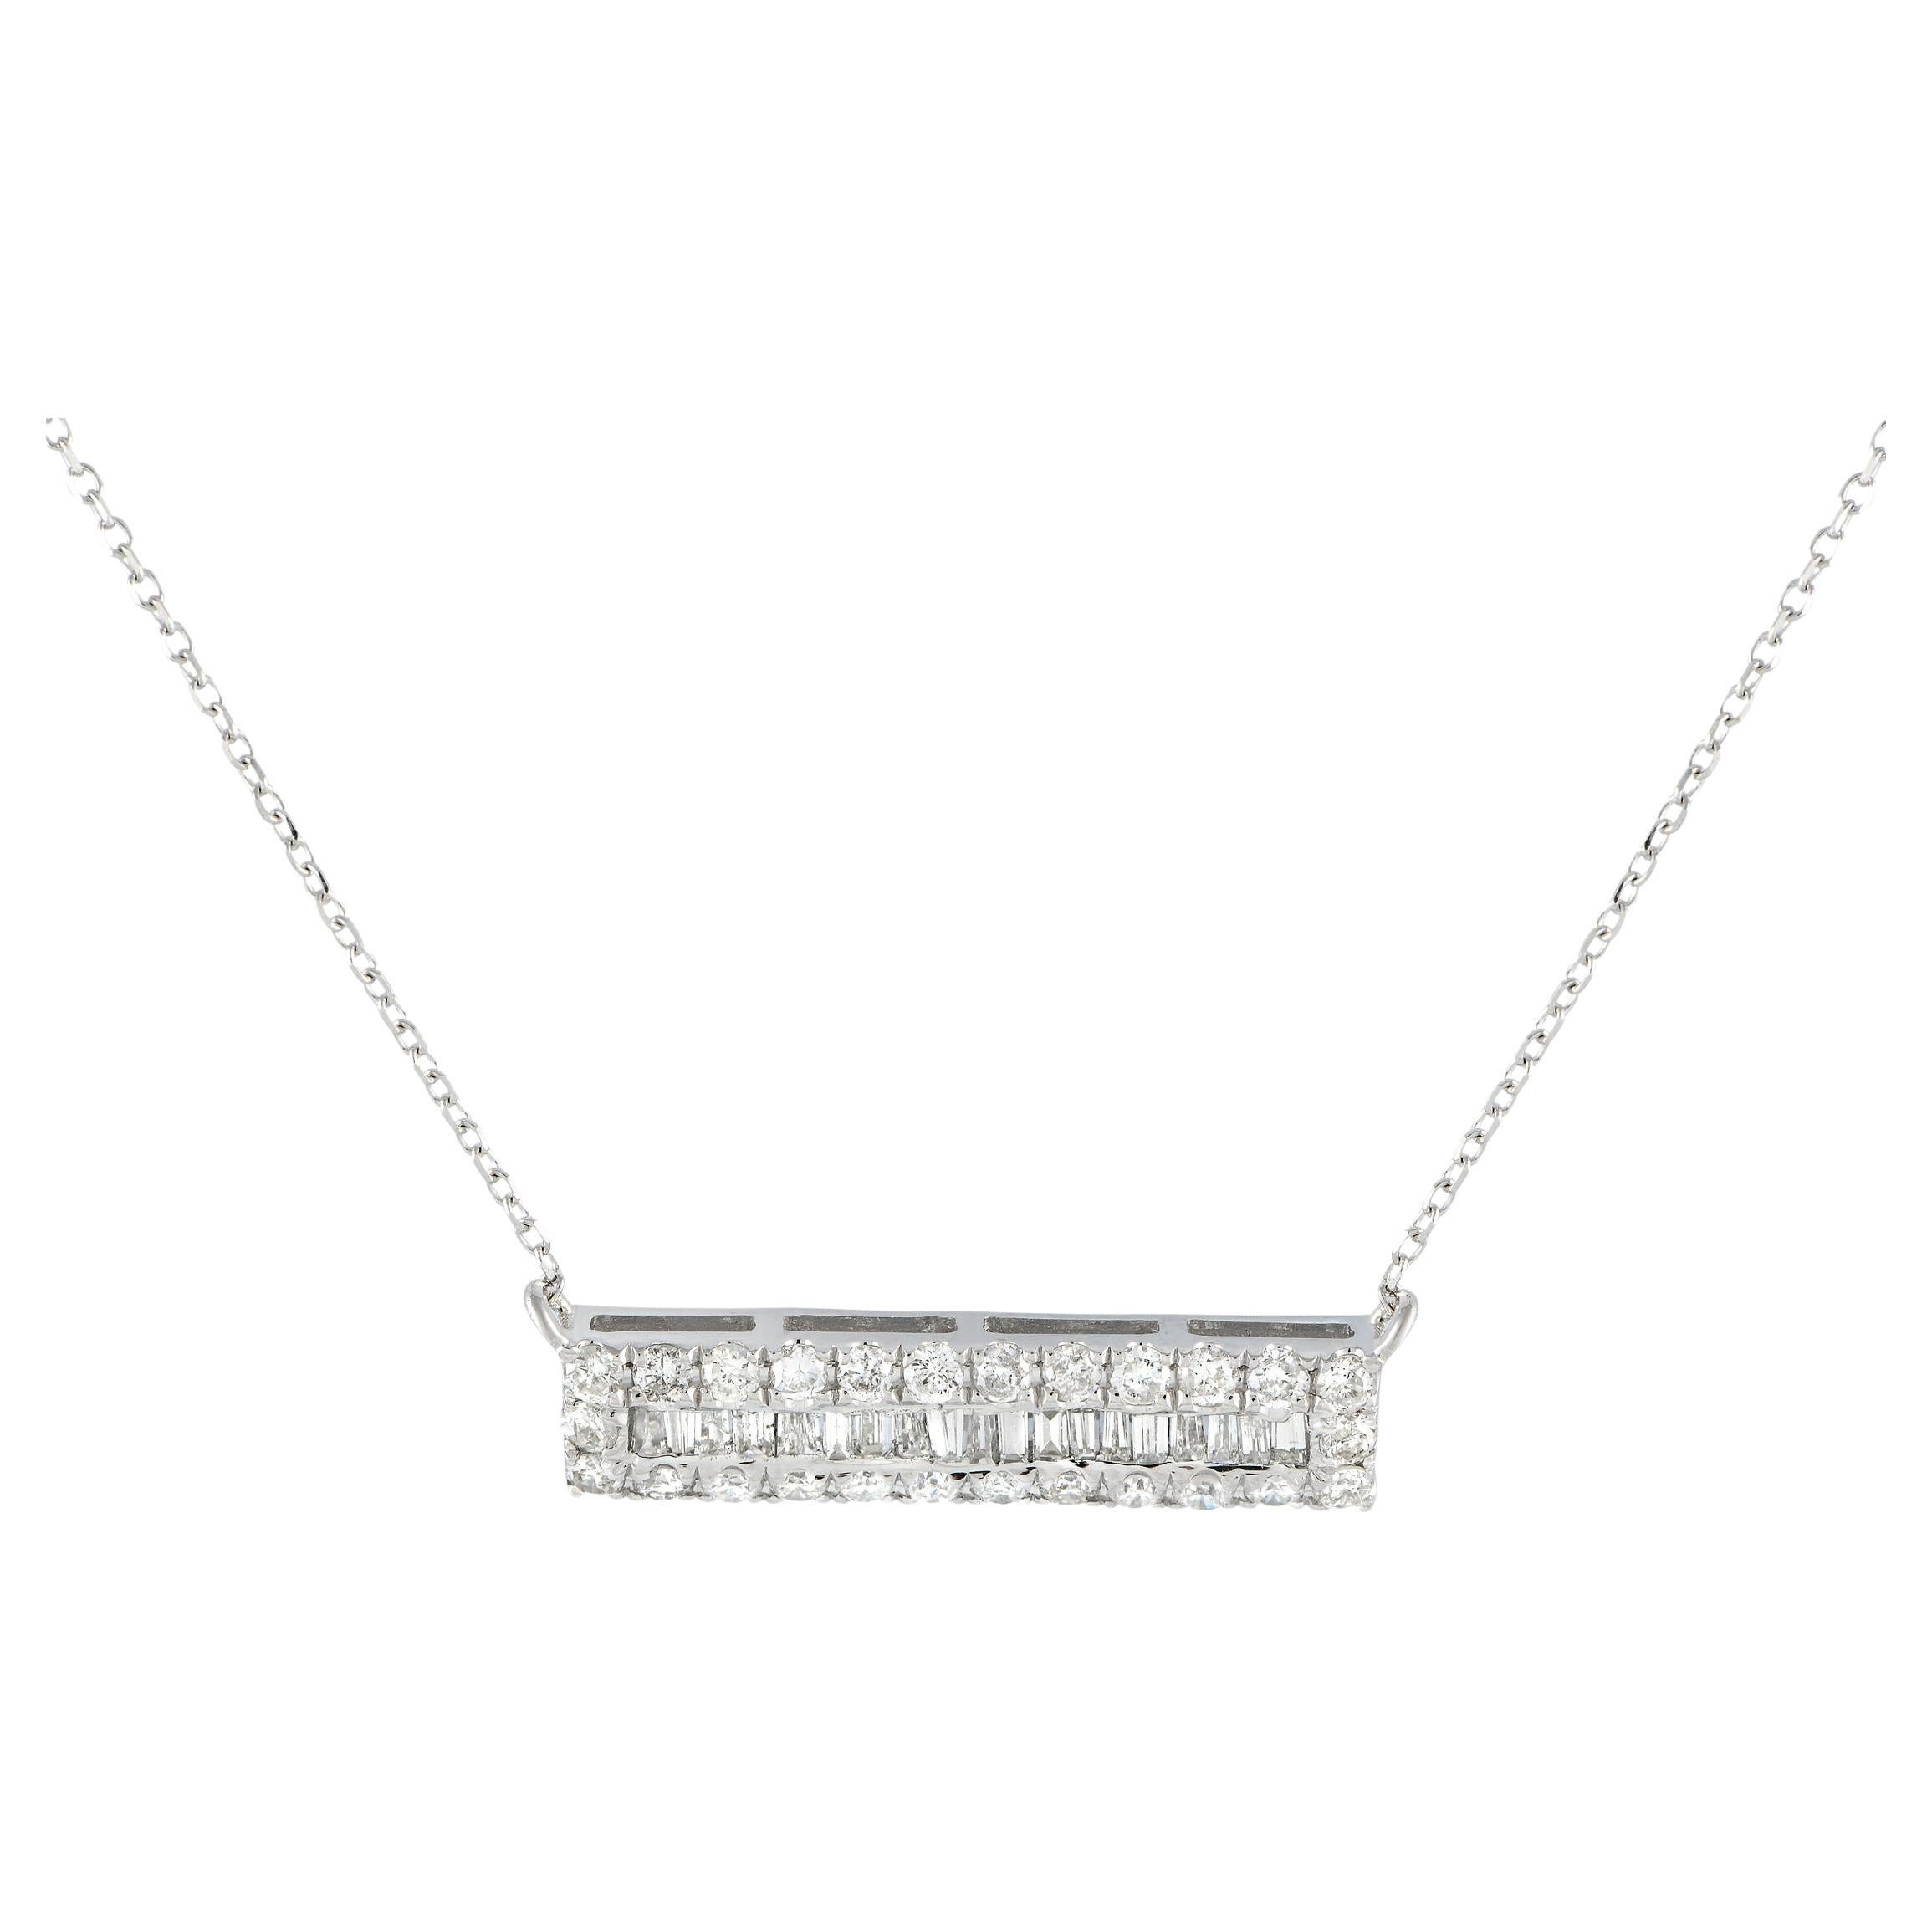 LB Exclusive 14K White Gold 0.80ct Diamond Bar Necklace PN14548 For Sale